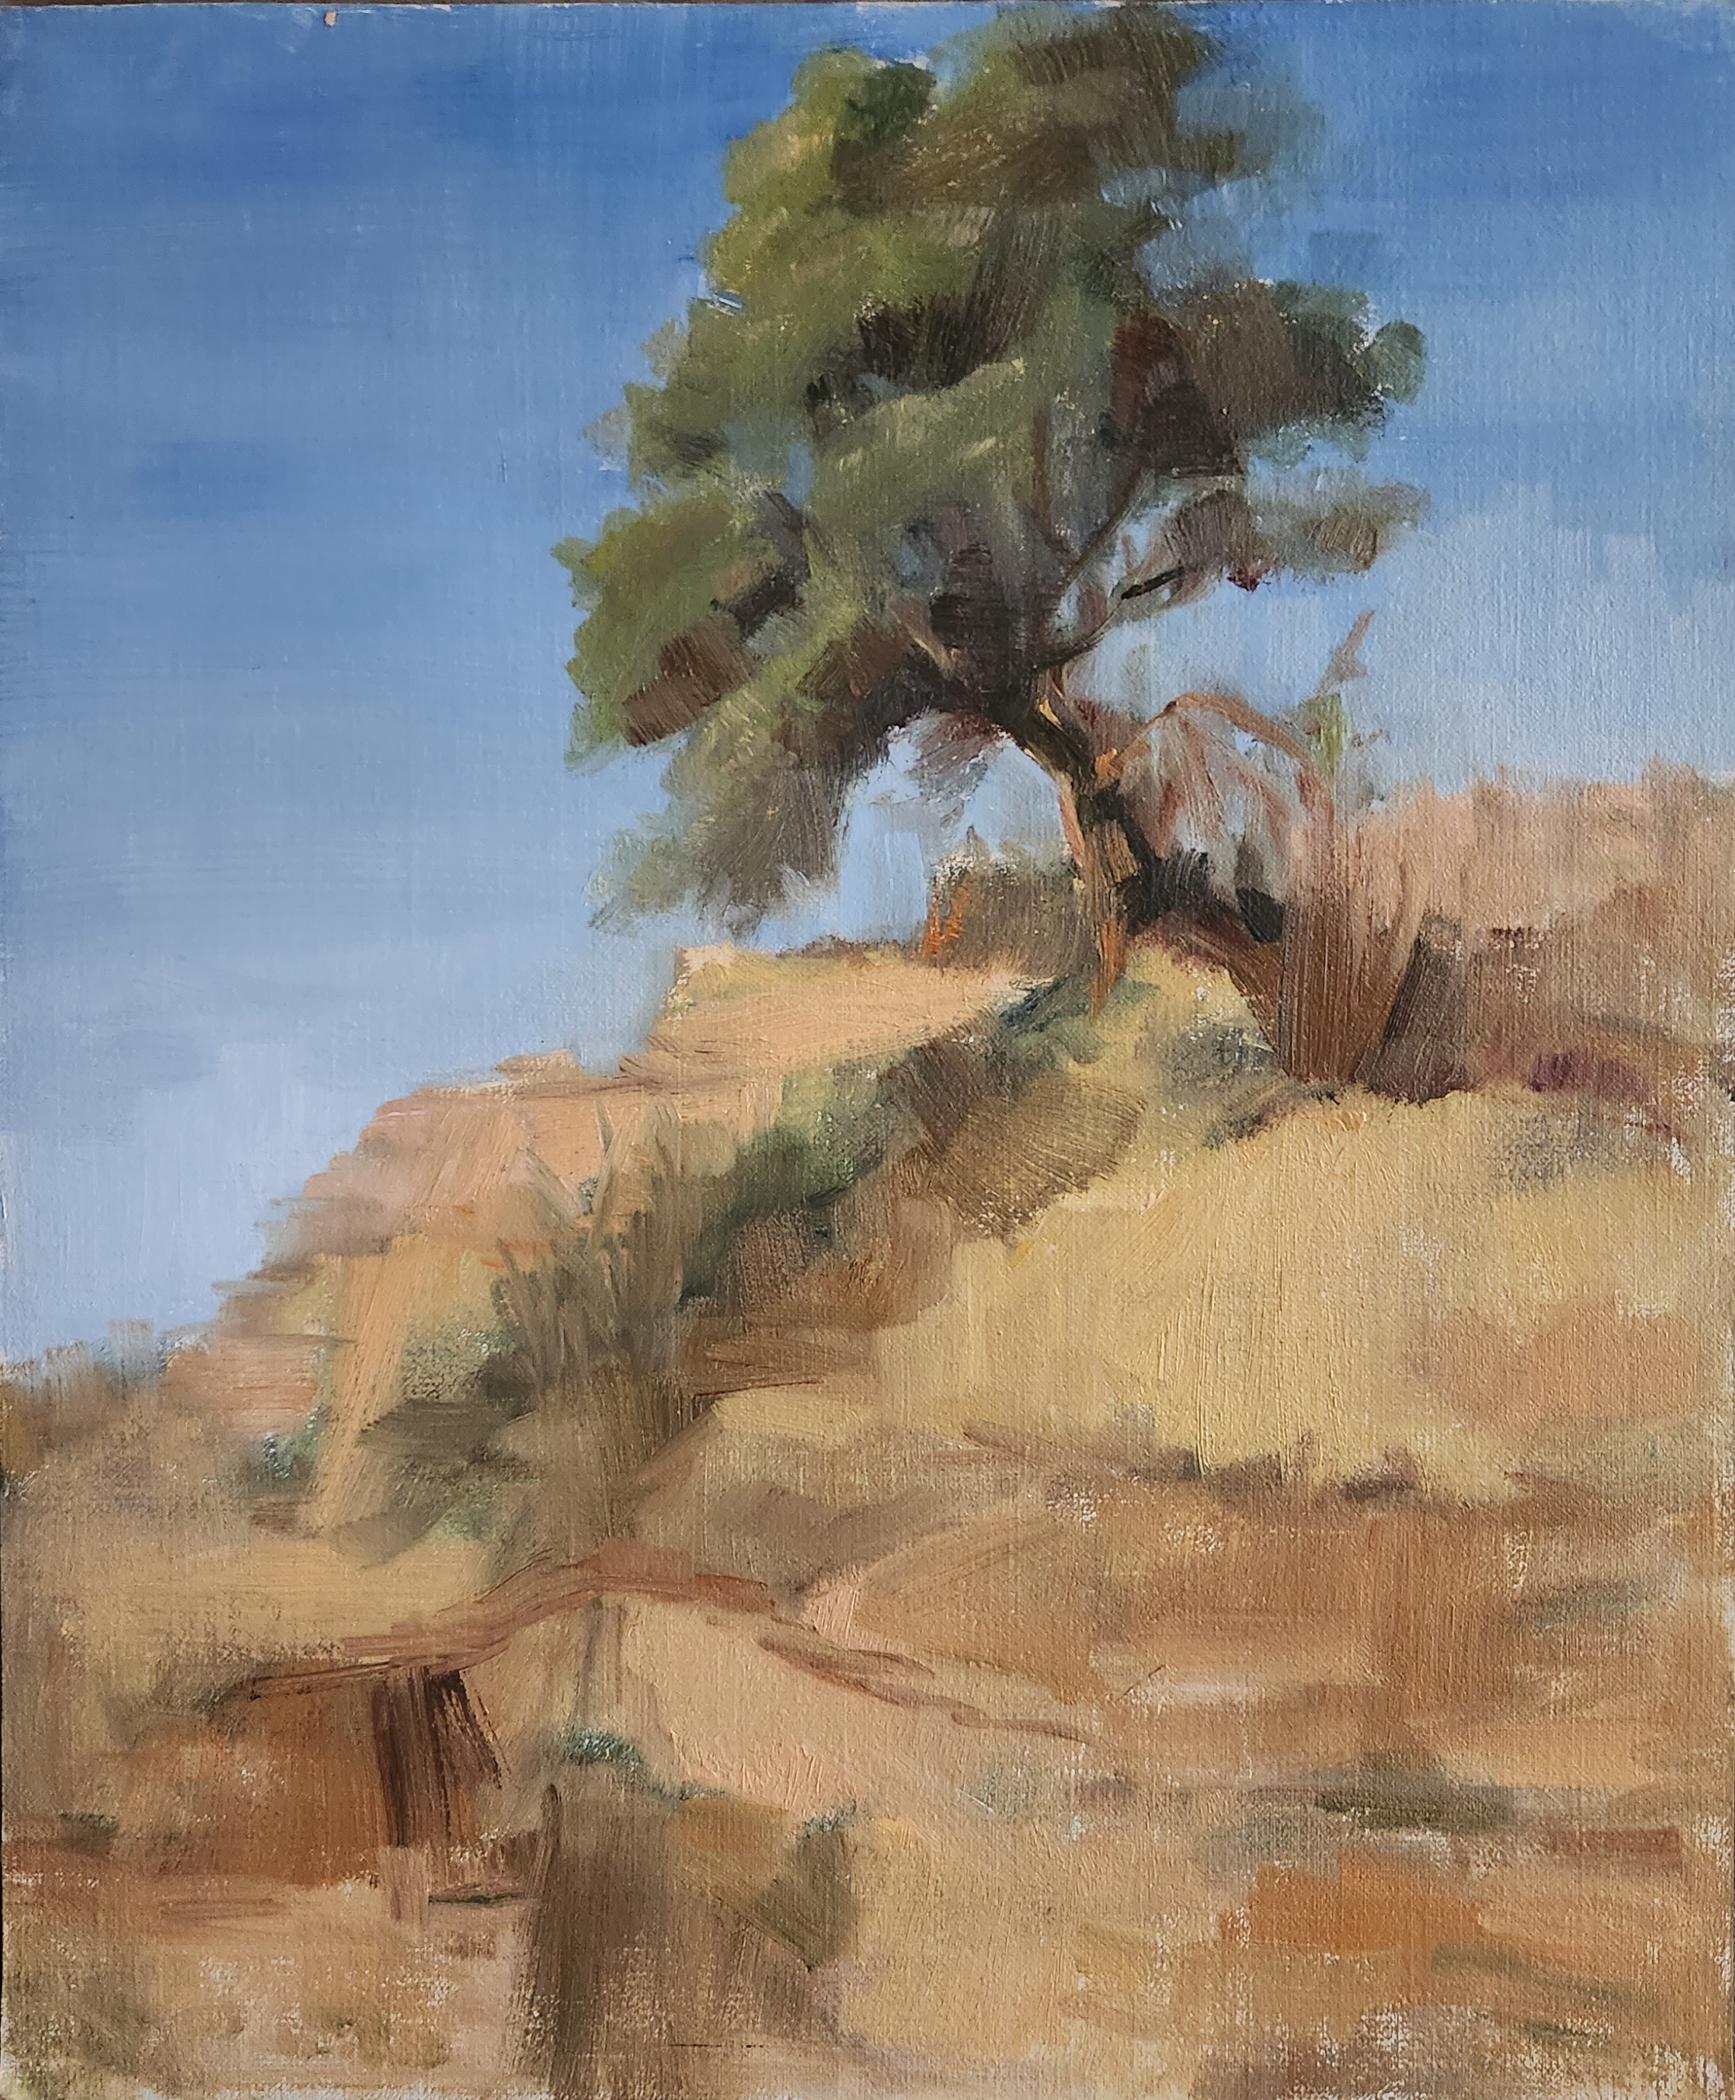 Pine on the Backbone, 12x9" oil on board - Painting by Lu Haskew